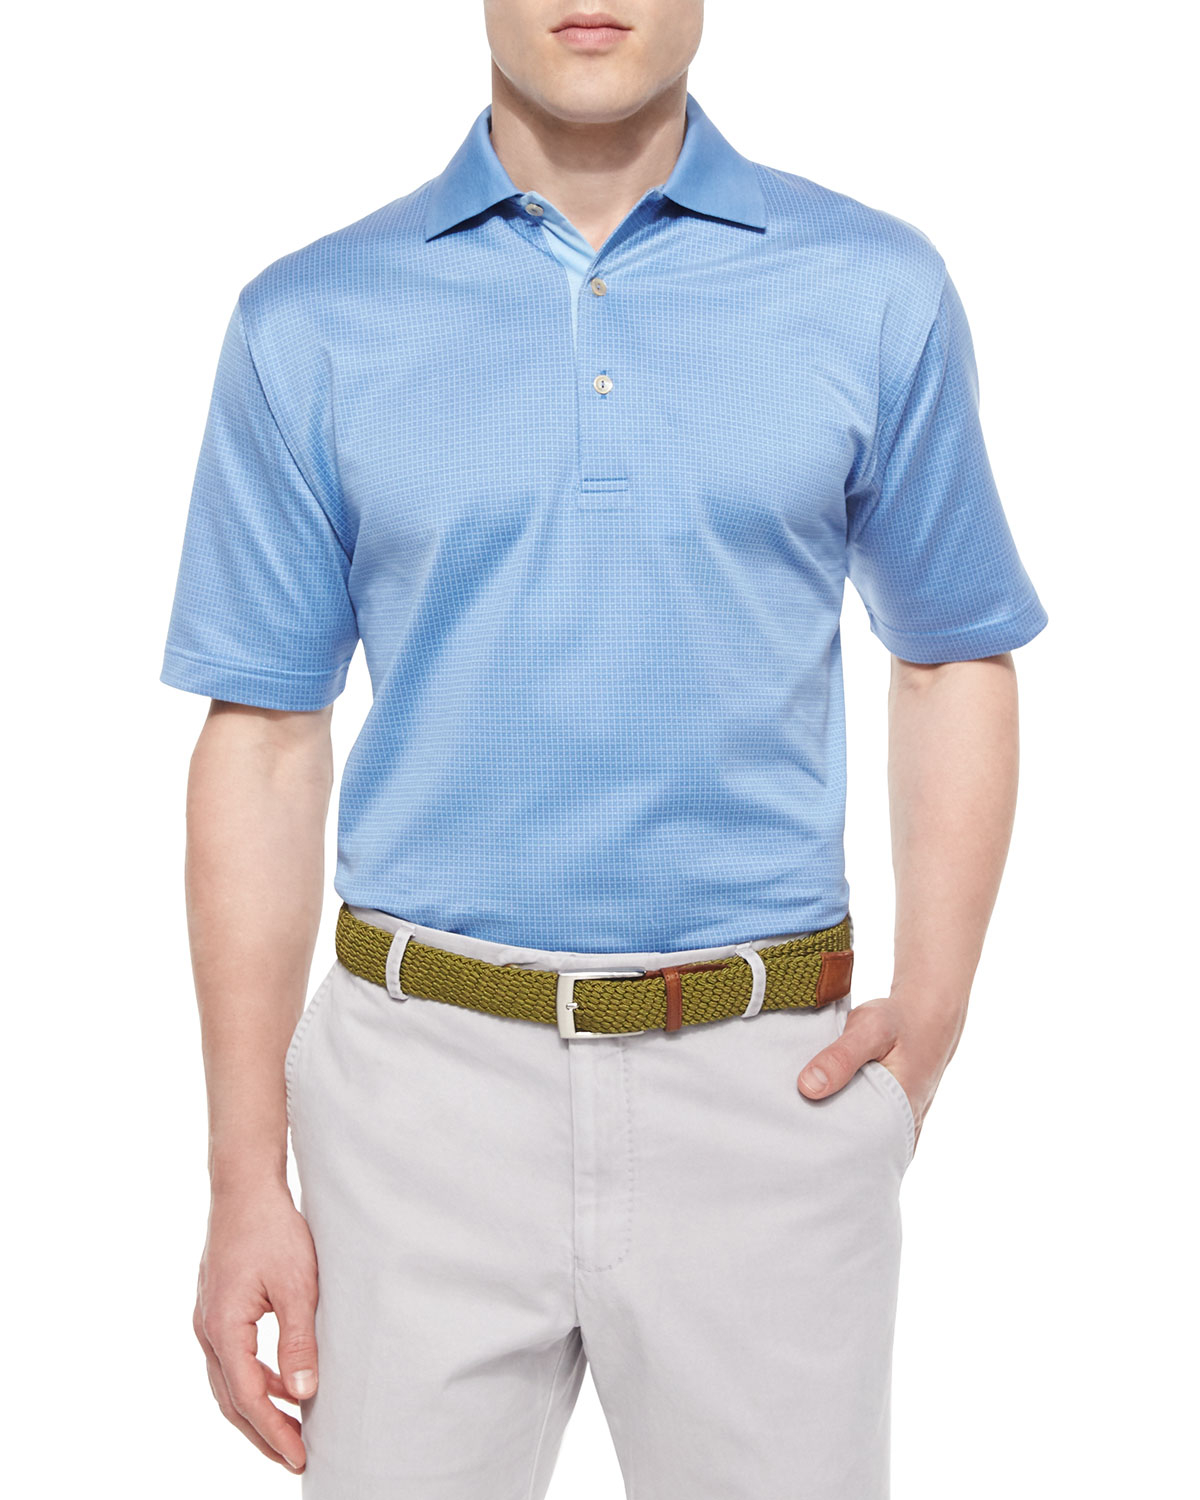 Lyst - Peter Millar Jacquard Lisle-knit Cotton Polo Shirt in Blue for Men